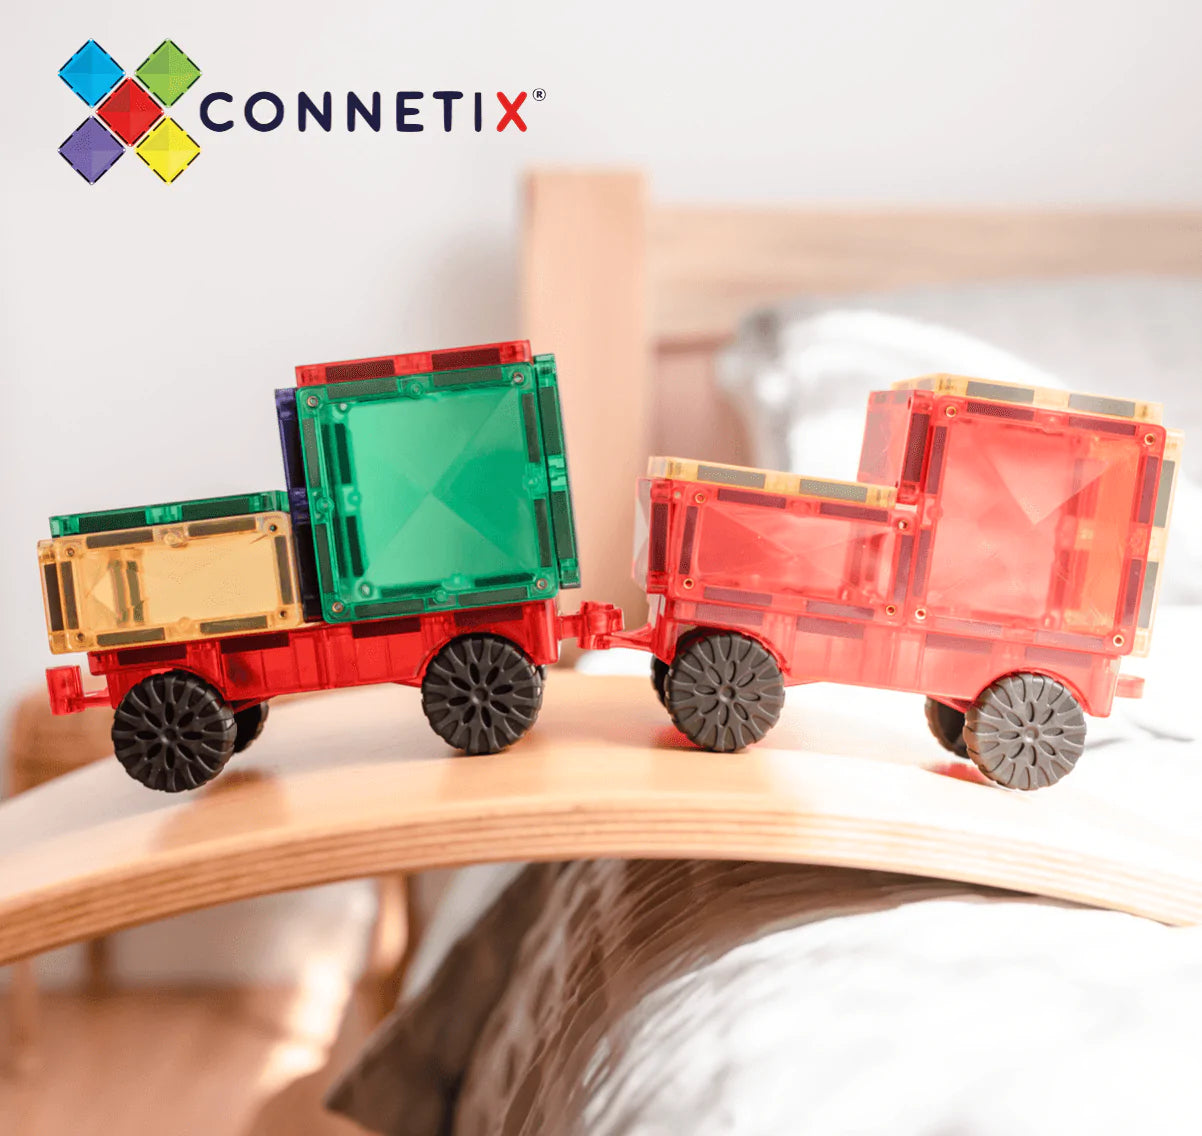 The Benefit of Connetix Tiles to Children’s Development